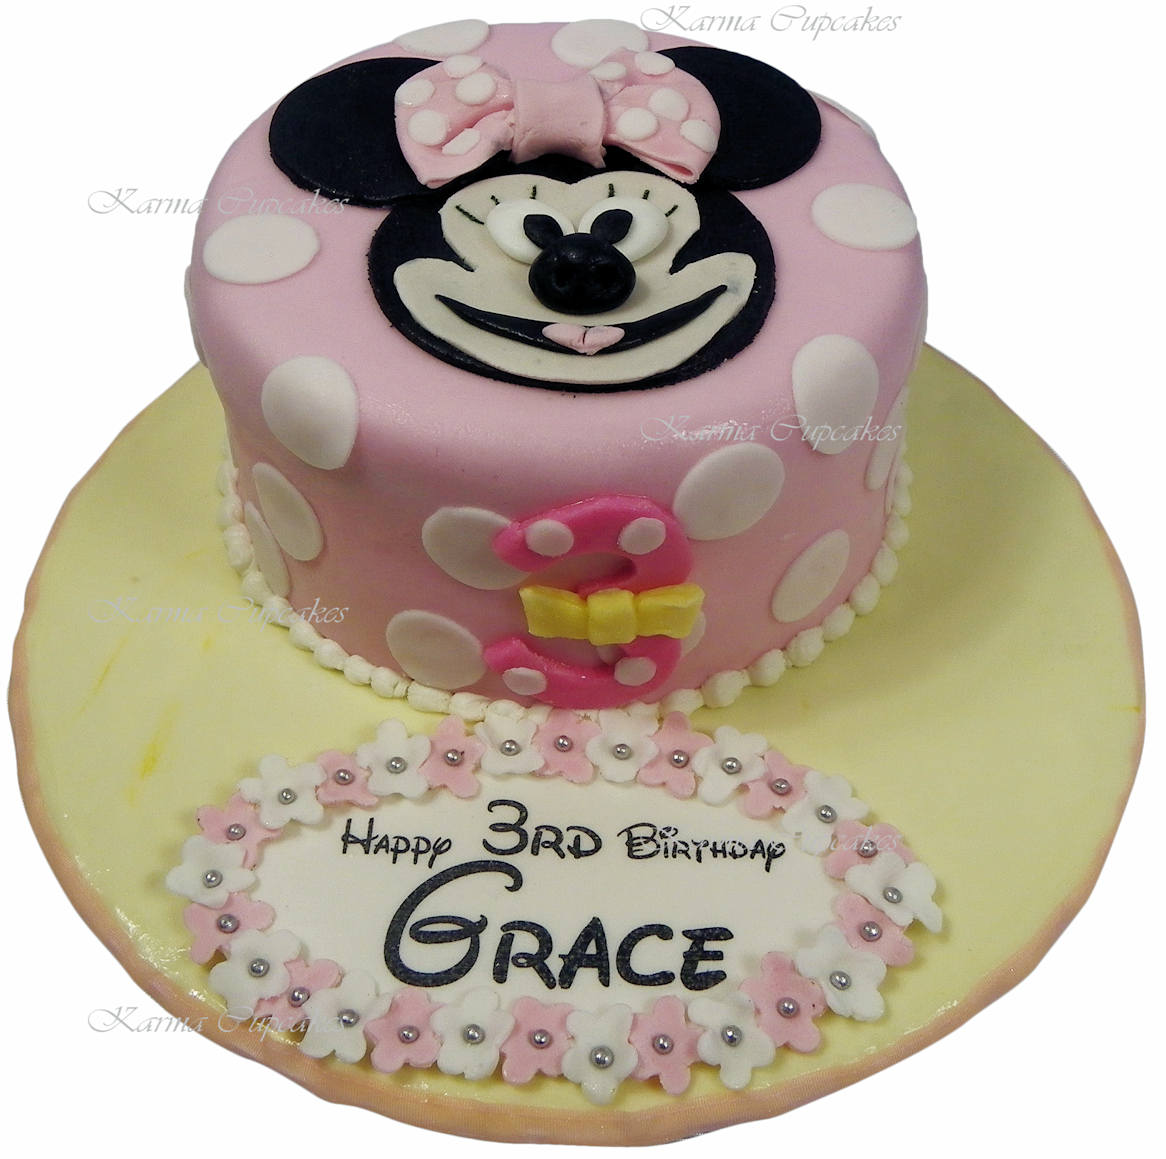 mini mouse kids birthday cake with edible text karma cupcakes gold coast copy